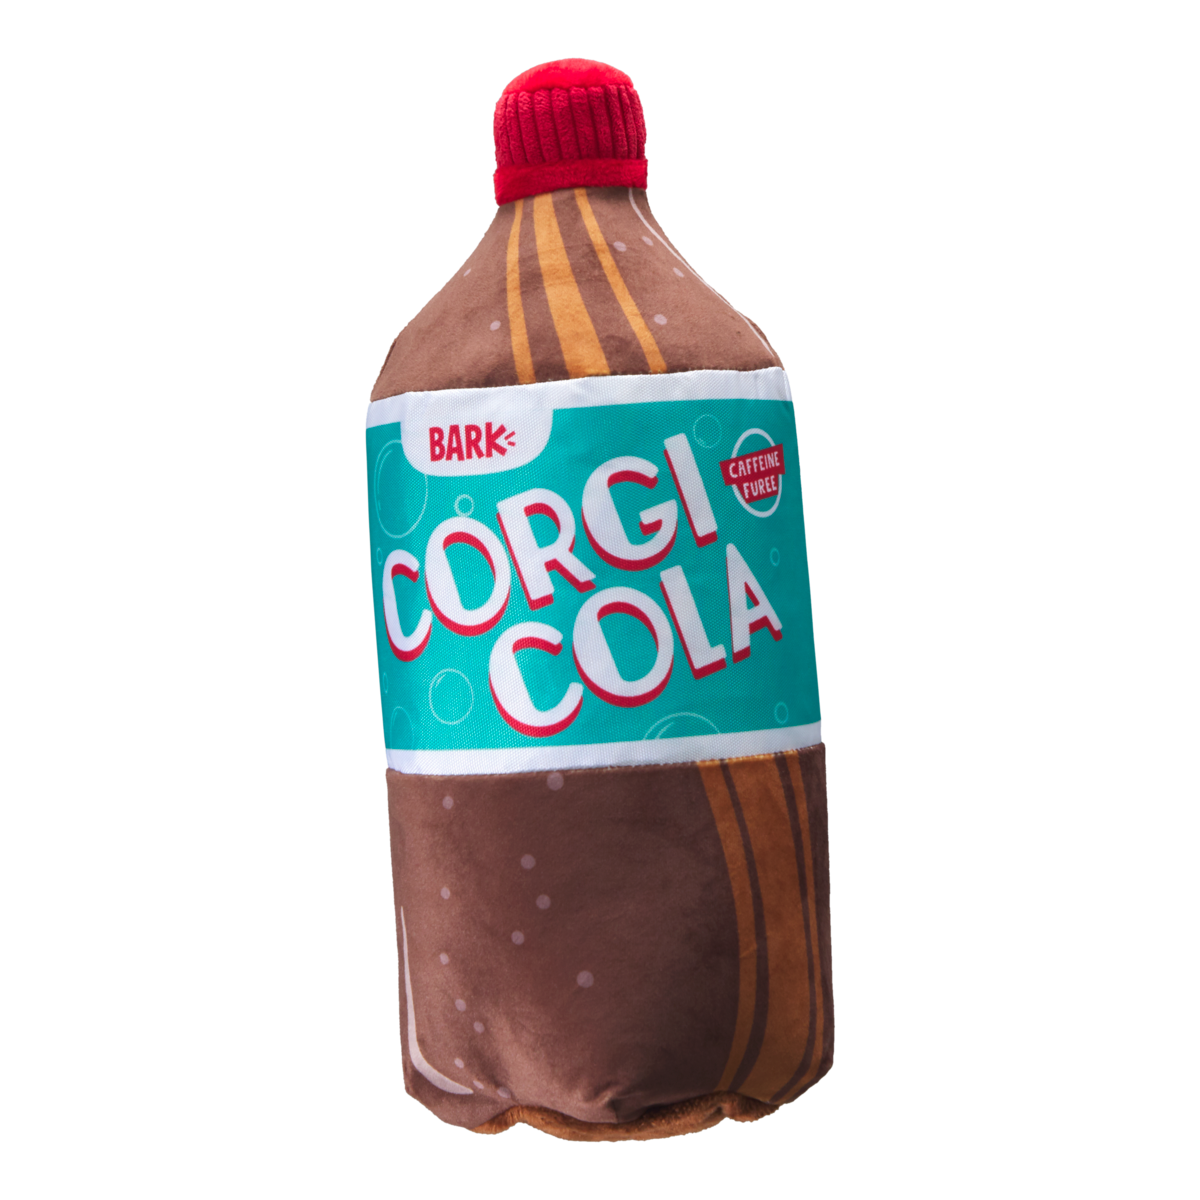 Corgi Cola